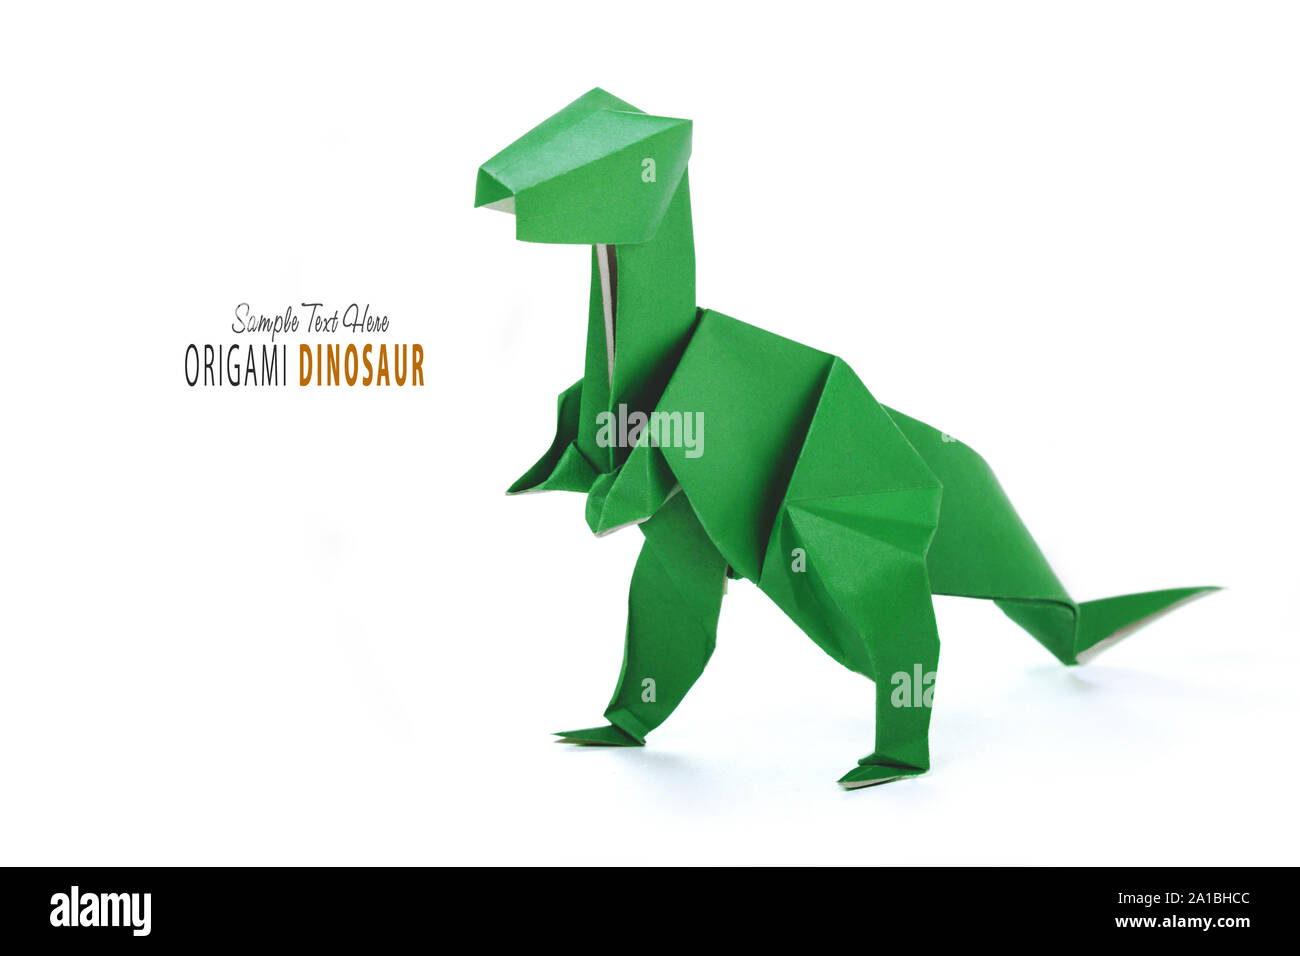 Origami dinosaur on white Stock Photo - Alamy